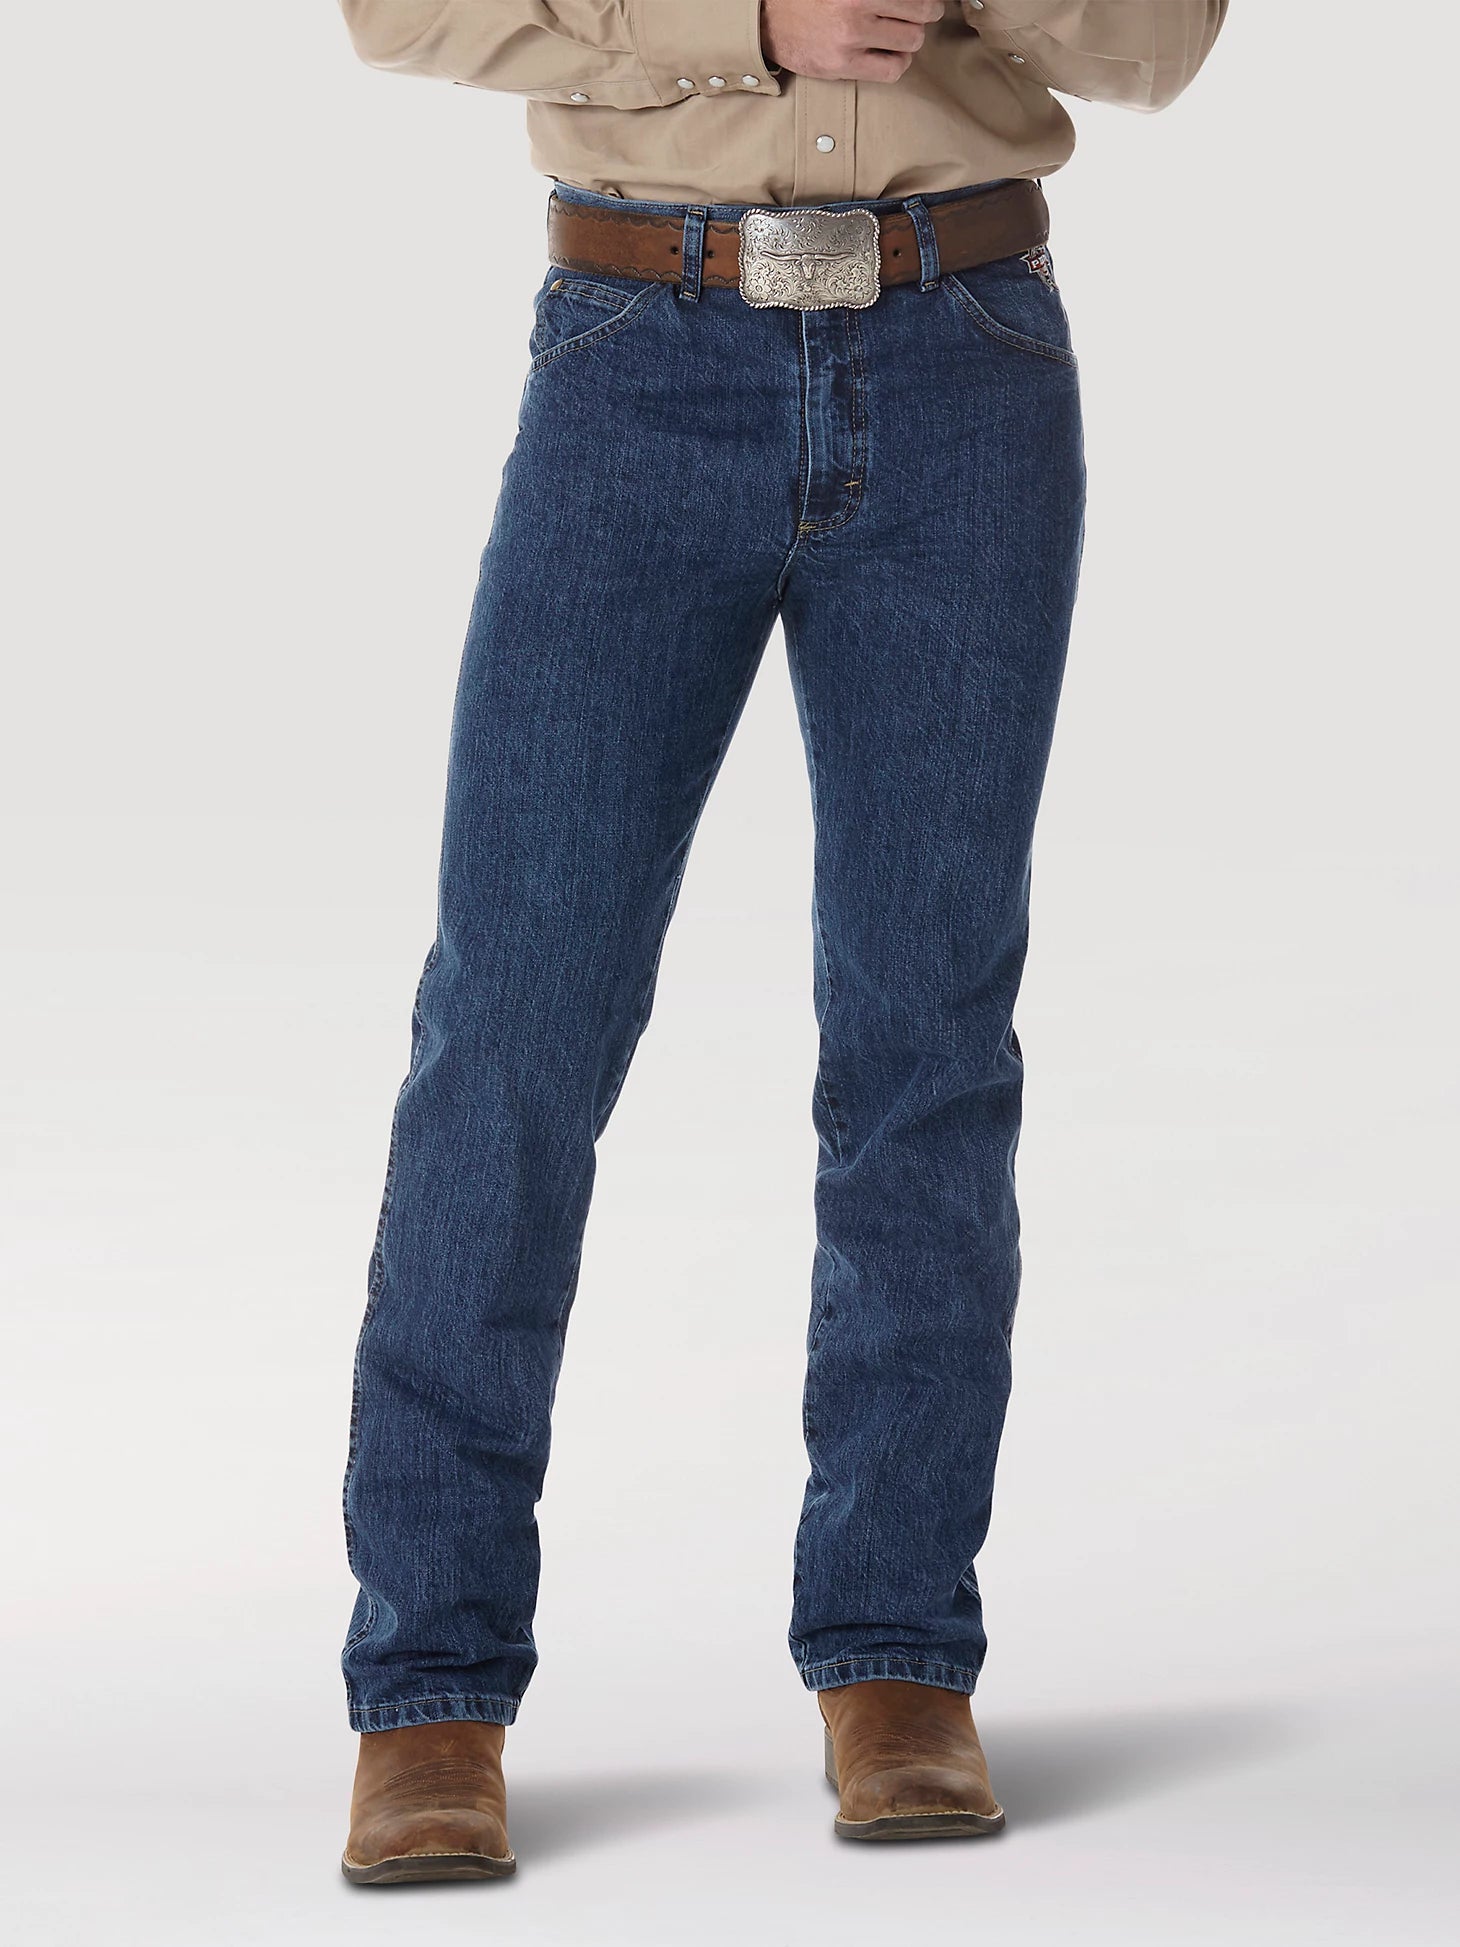 Jeans Wrangler PBR Slim Fit Authentic Stone Caballero